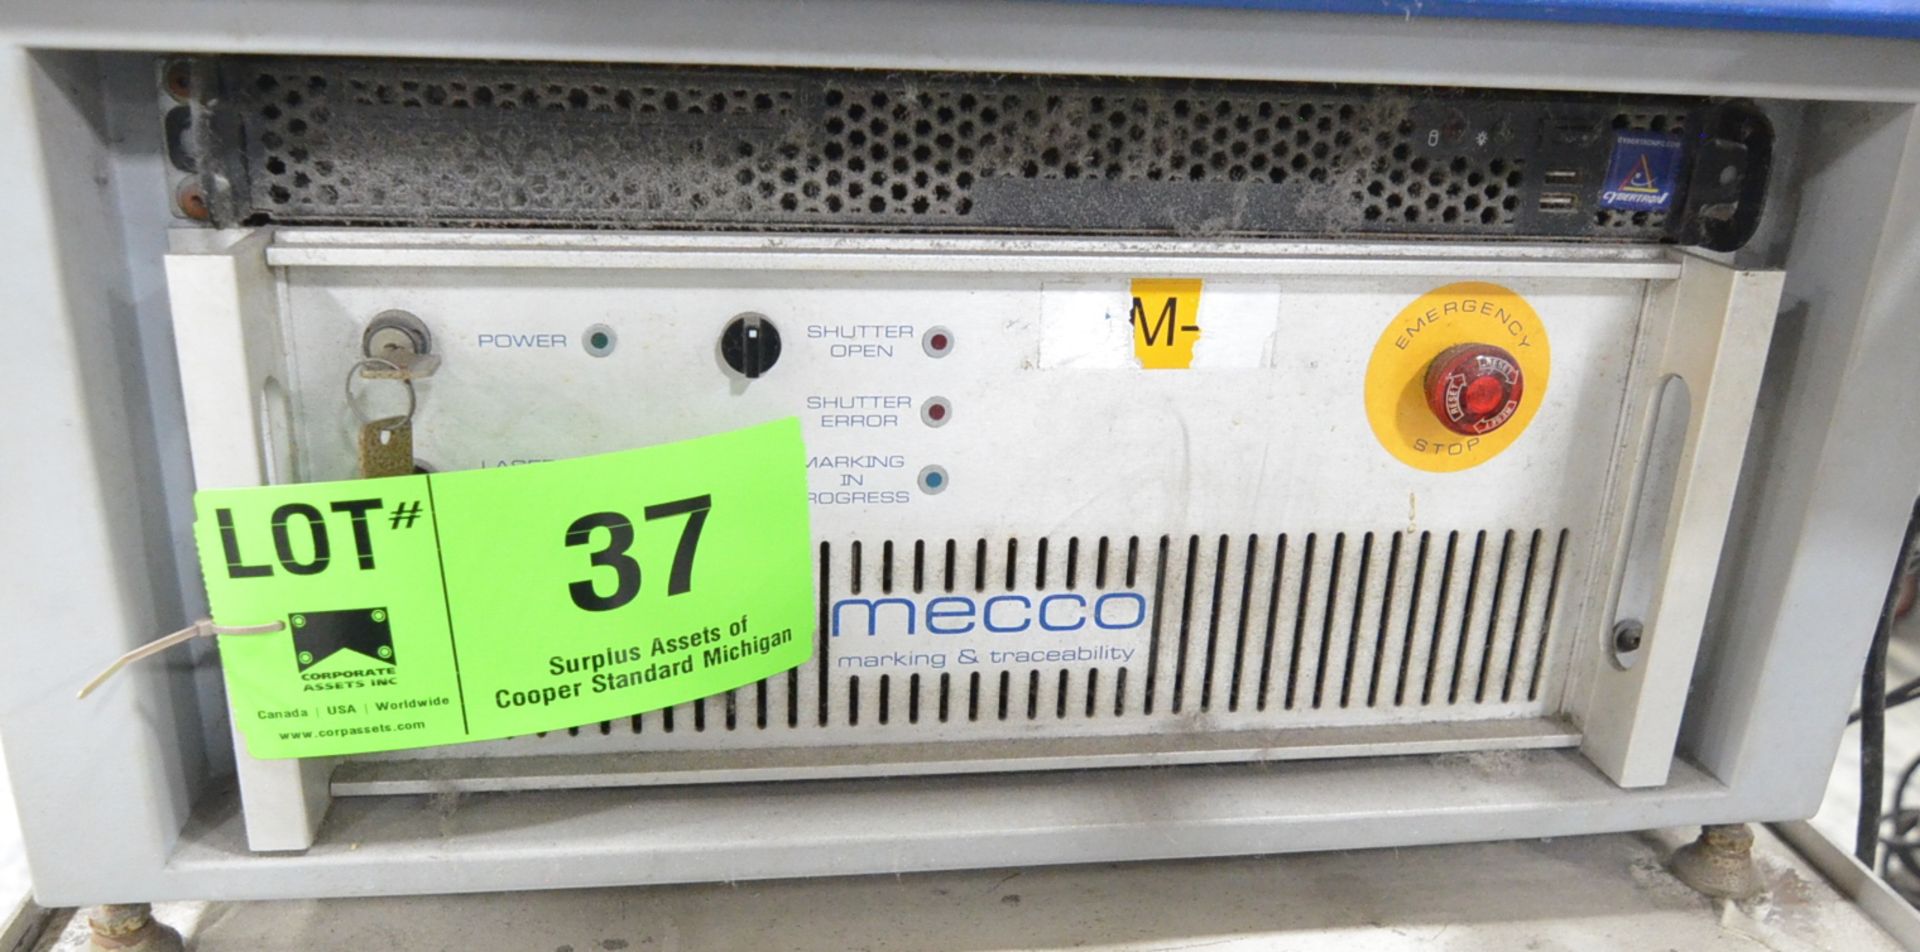 MECCO (2009) MECCOMARK 20WATT FIBER LASER PARTS MARKING SYSTEM WITH WINLASE WINDOWS PC BASED - Image 5 of 6